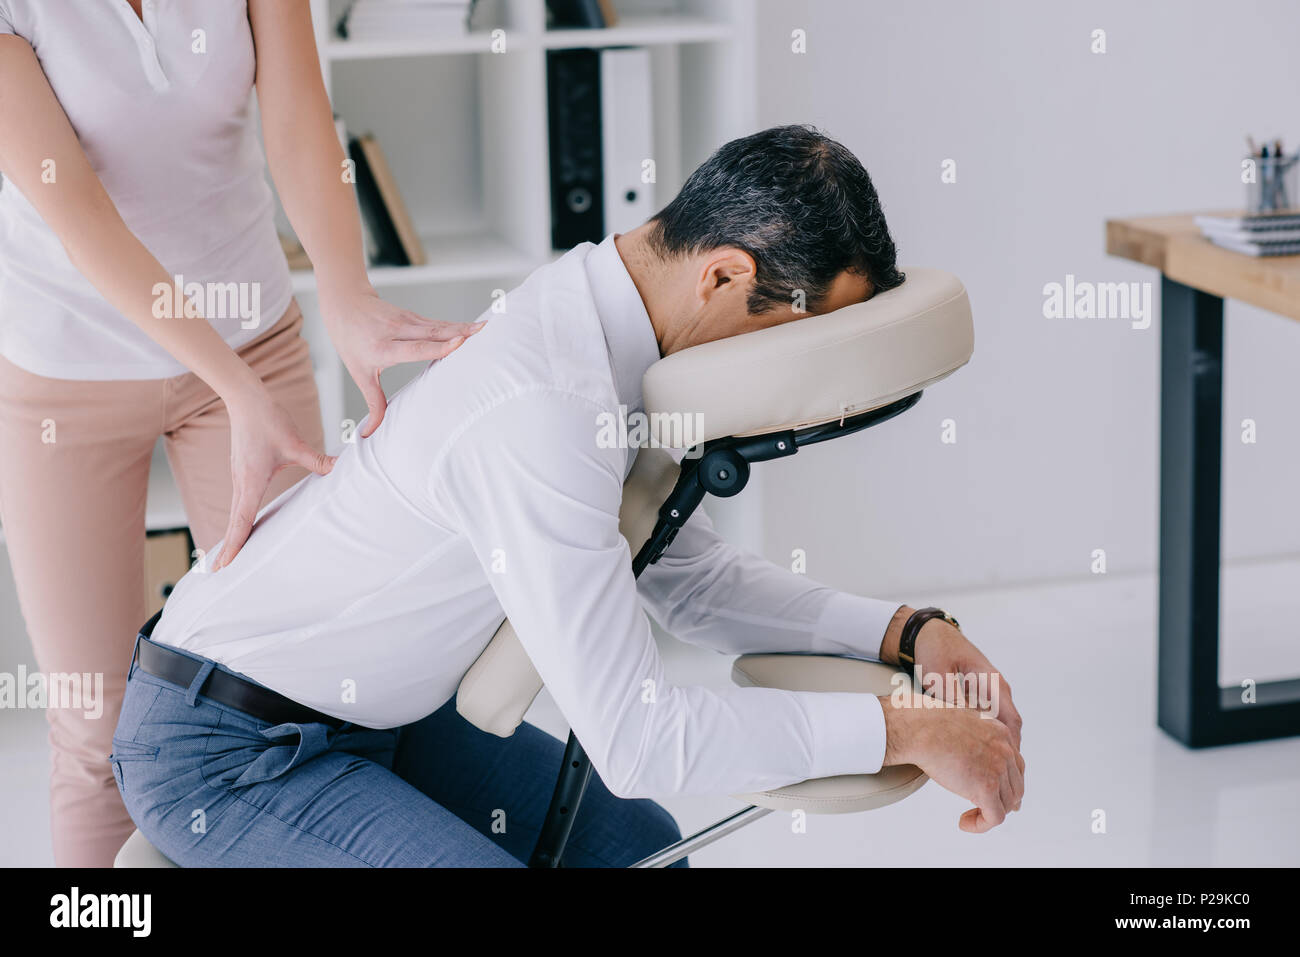 https://c8.alamy.com/comp/P29KC0/masseuse-doing-back-massage-on-seat-at-office-P29KC0.jpg